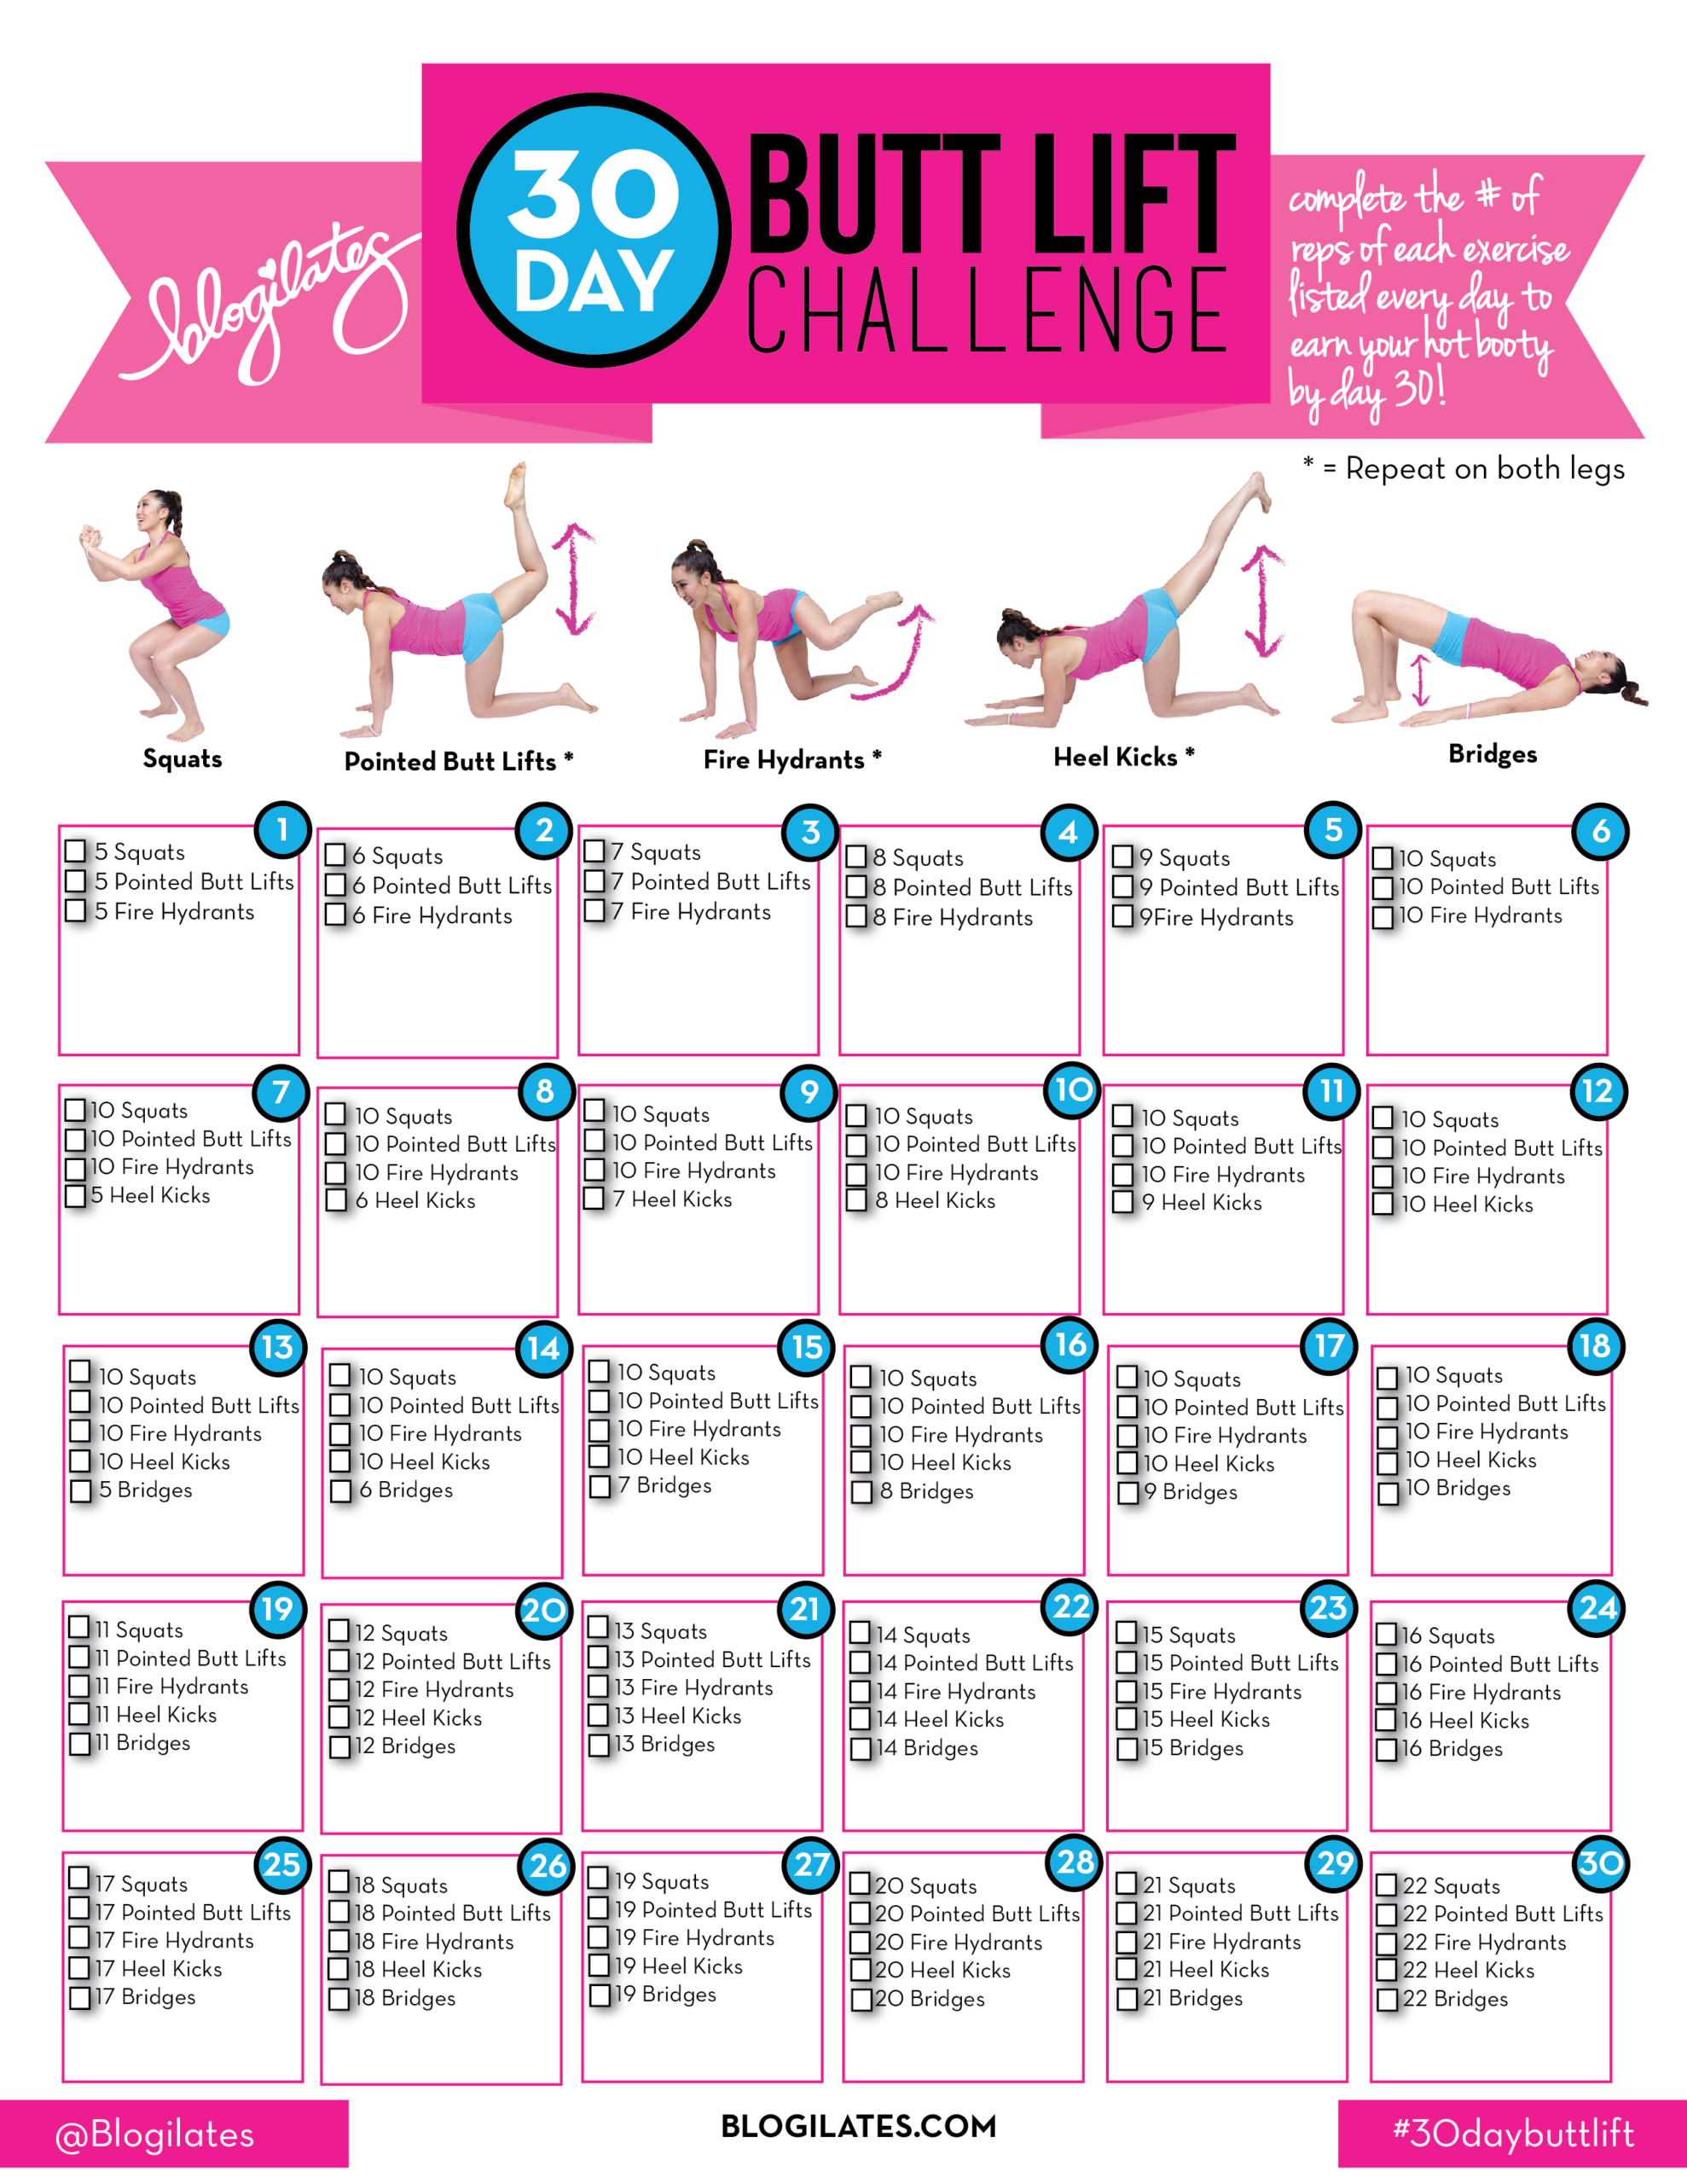 30 Day Butt Lift Challenge!